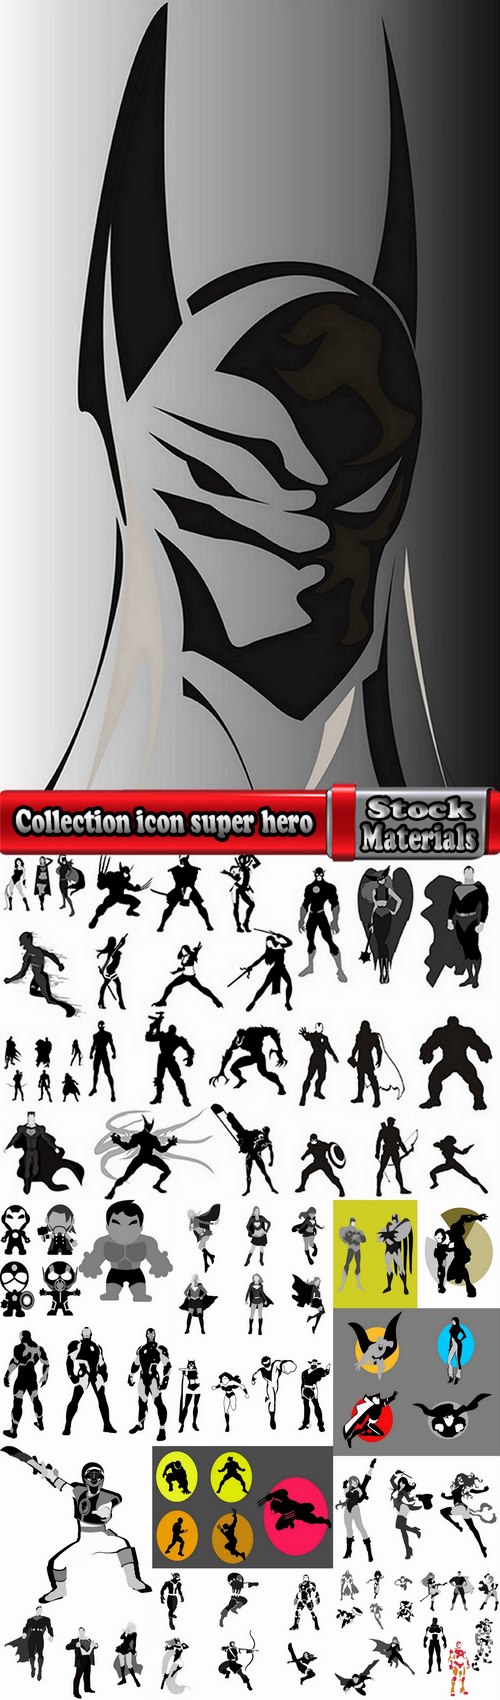 Collection icon super hero silhouette cartoon comic vector image 25 EPS